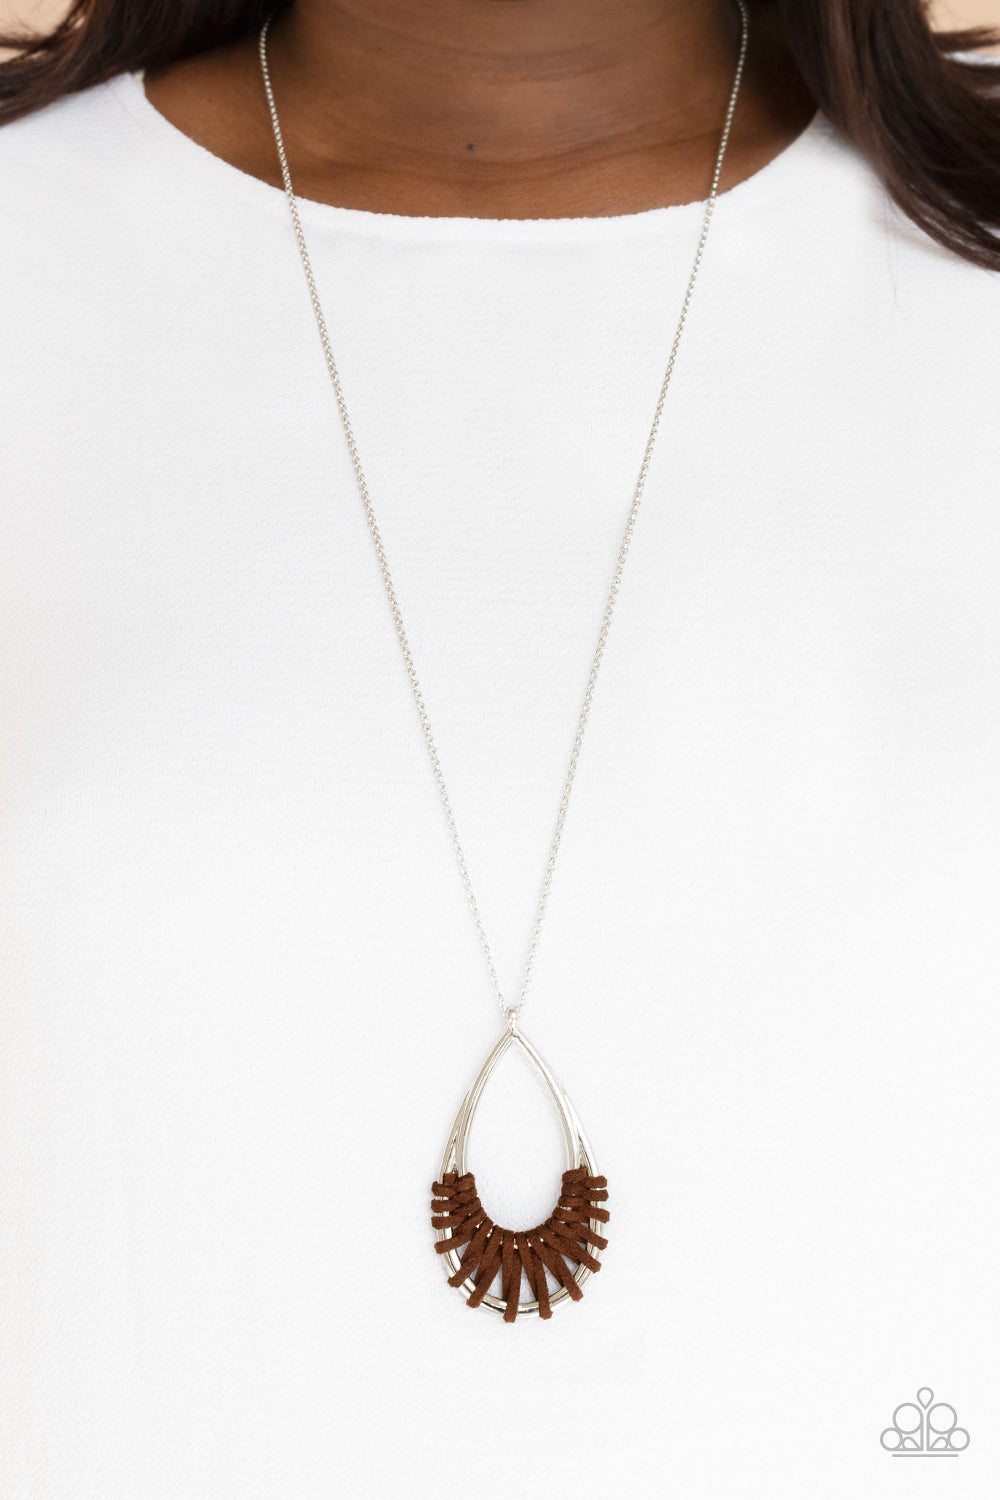 Homespun Artifact Necklace - Brown